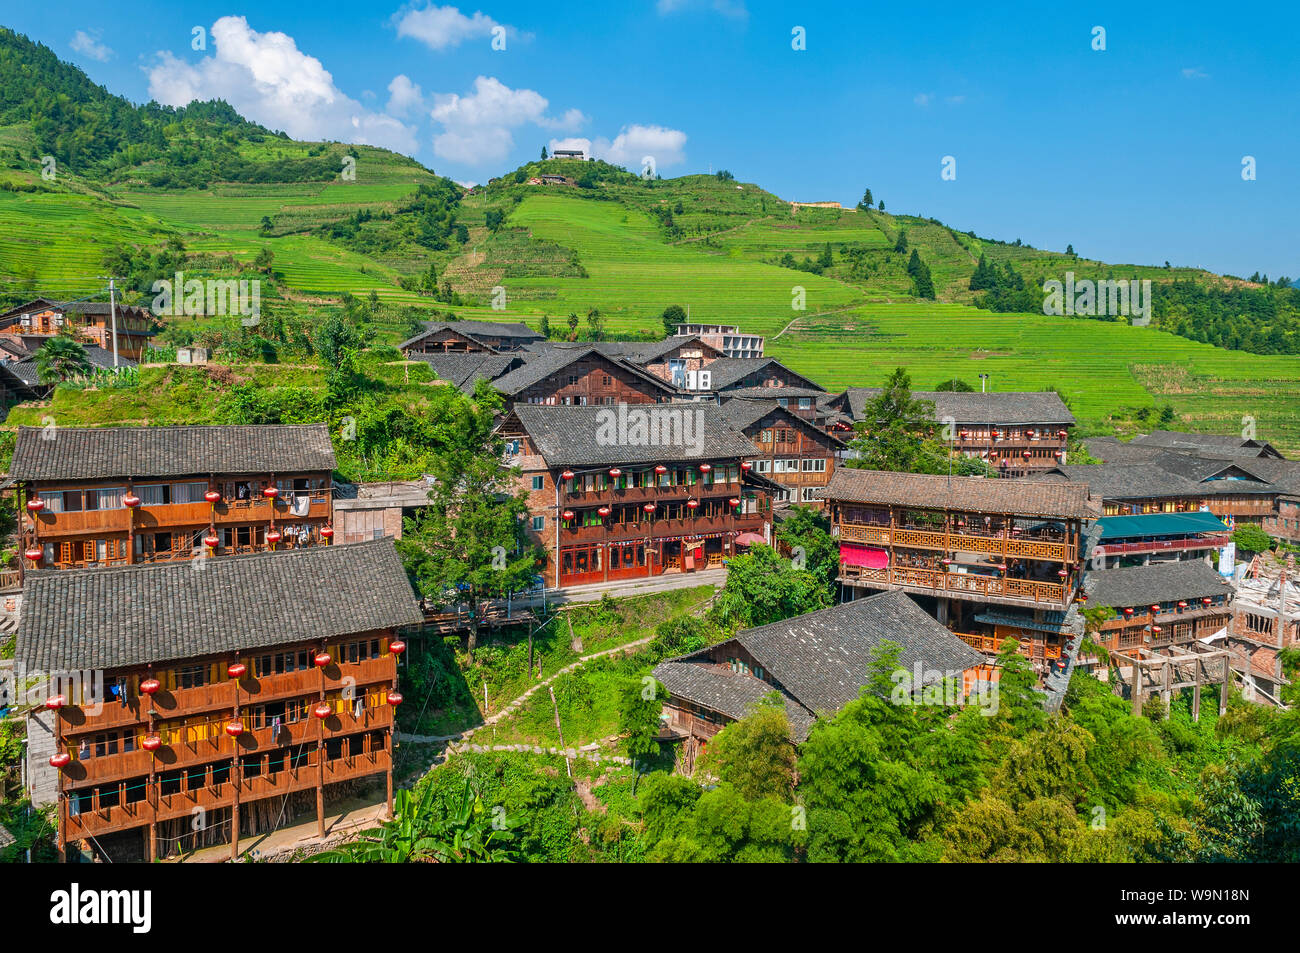 Das berühmte Dorf Ping inmitten von Reisterrassen Longji terrassierten Feldern wie die malerische Gegend bekannt, Longsheng County, Guangxi Province, China. Stockfoto